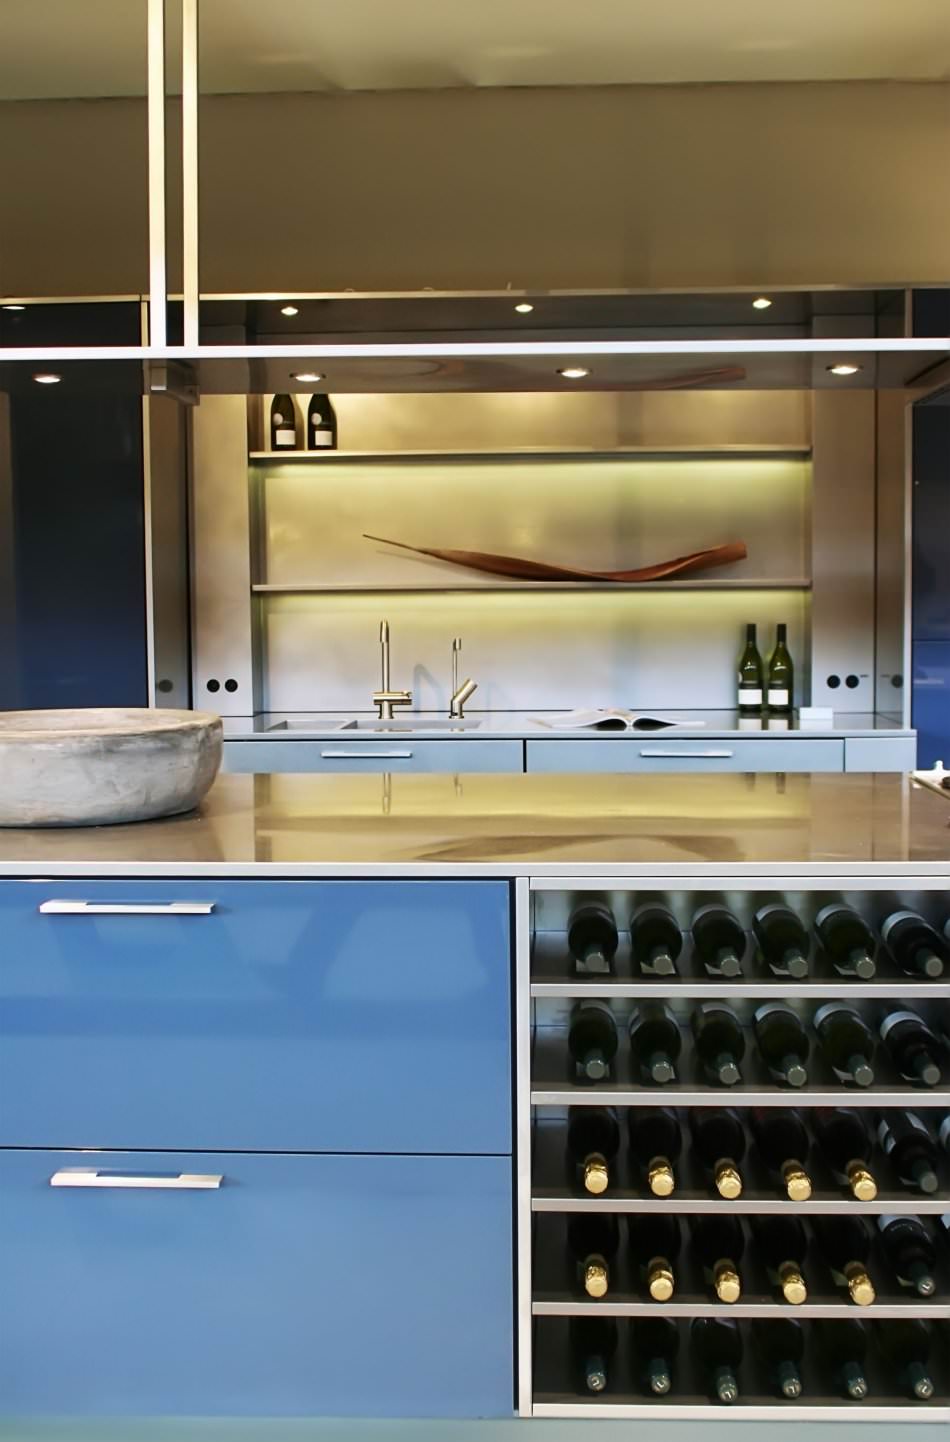 RAL 5012 Light Blue High Gloss Kitchen Cabinets